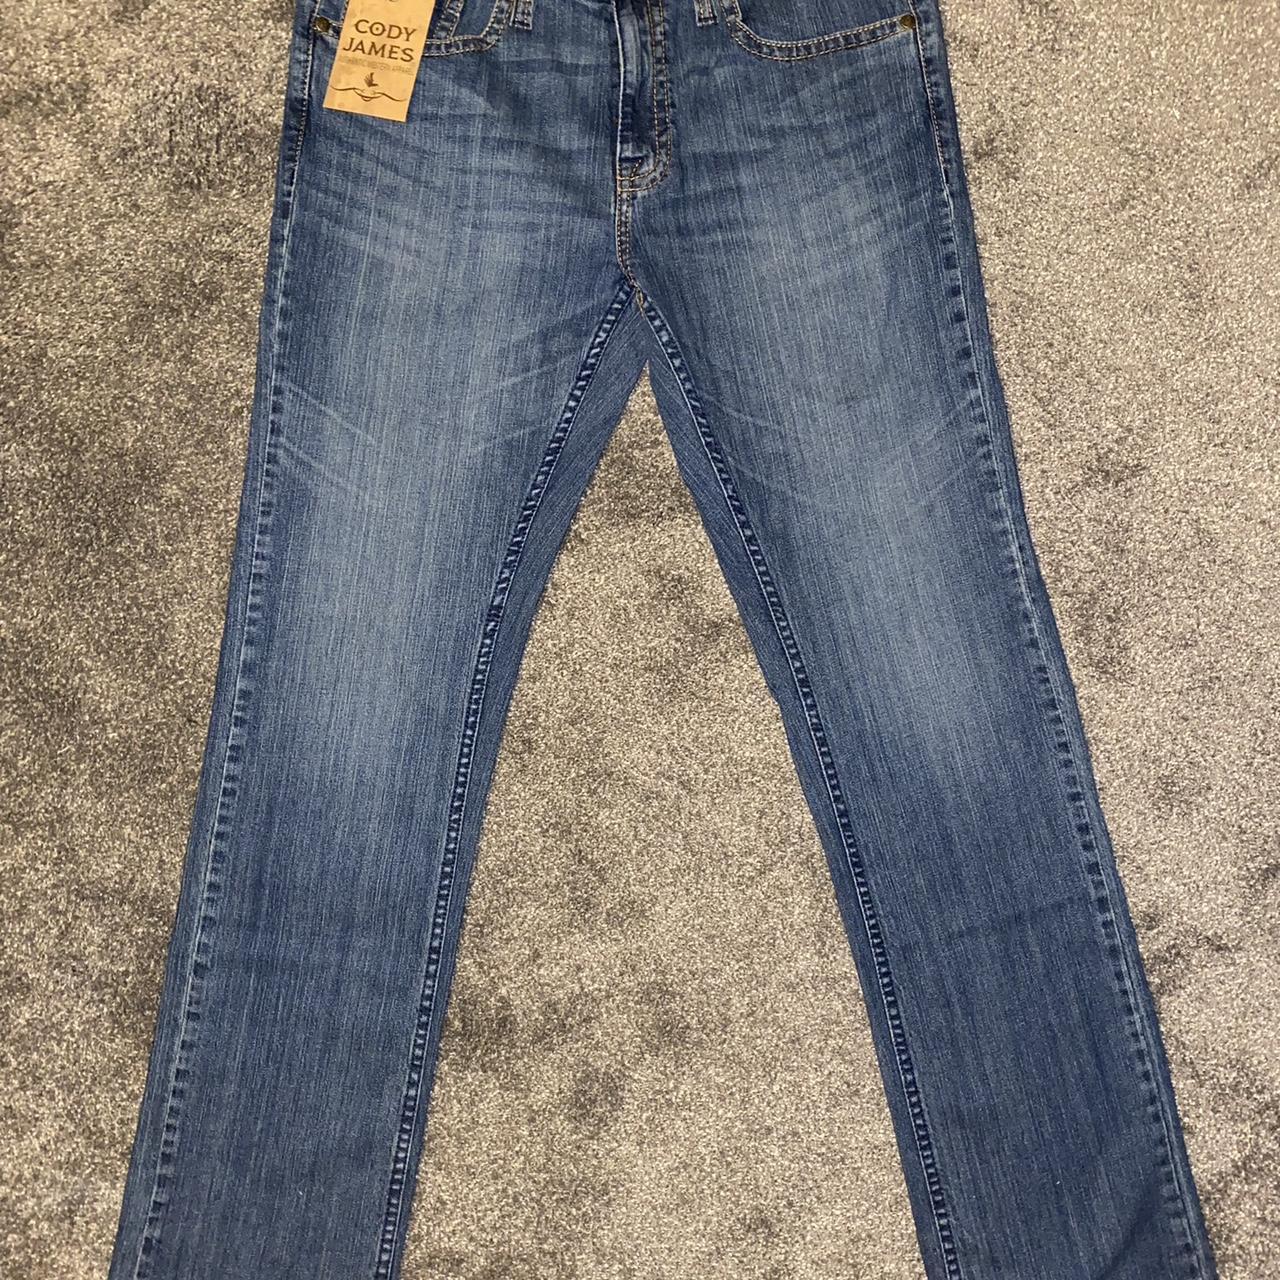 Cody James jeans totally new 34W X 36L SLIM STRAIGHT - Depop